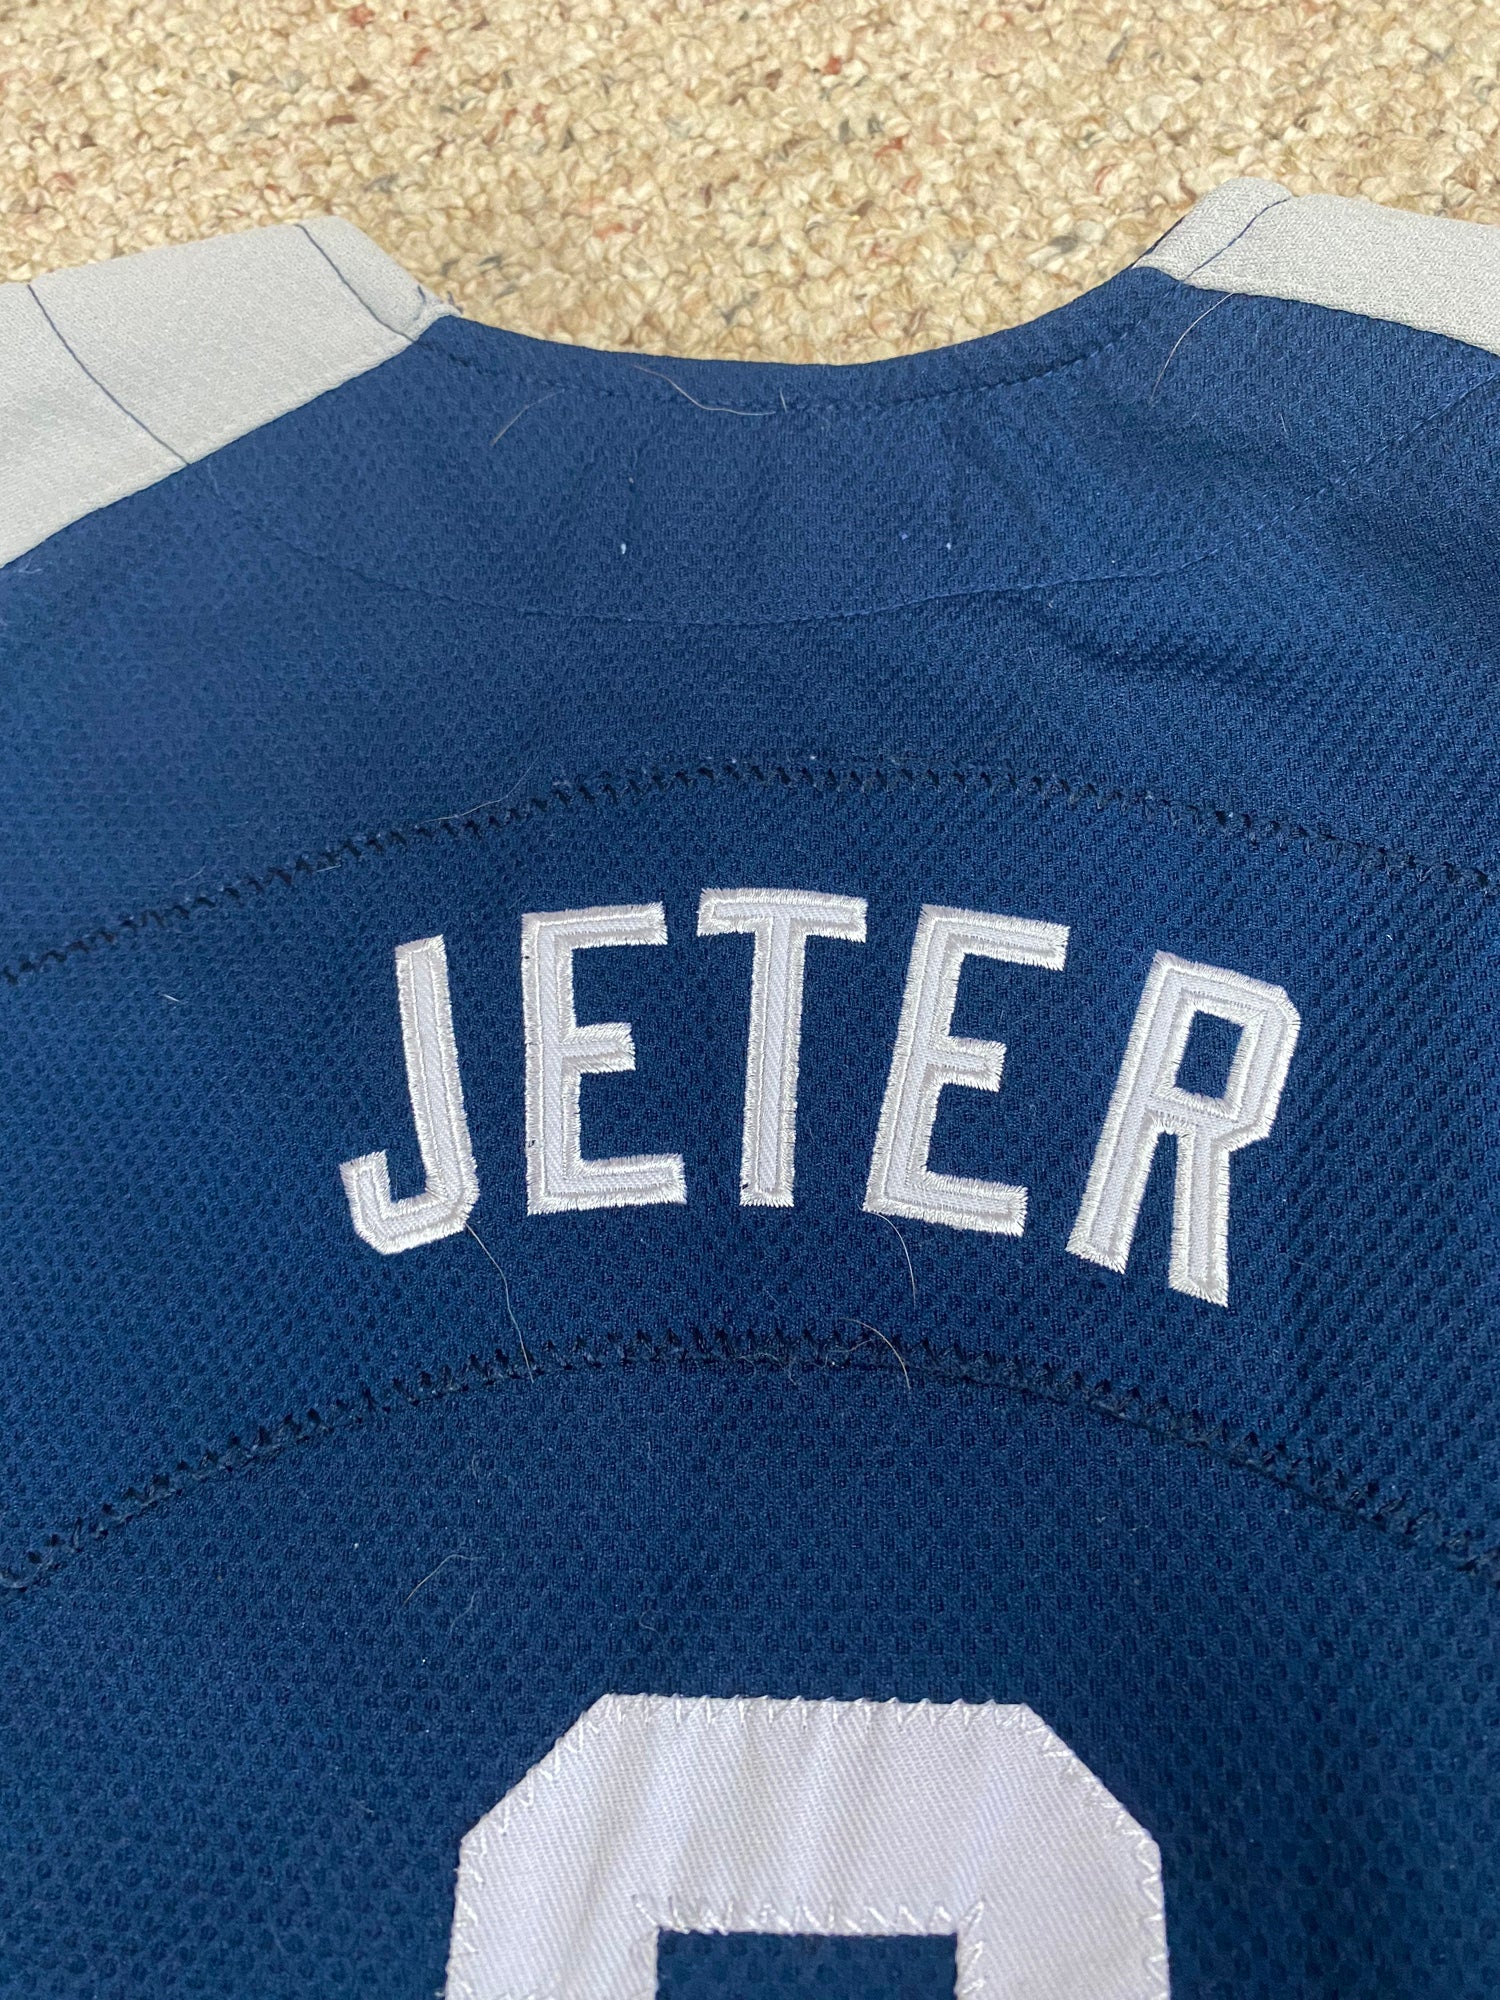 Derek Jeter New York Yankees YOUTH Jersey – Classic Authentics